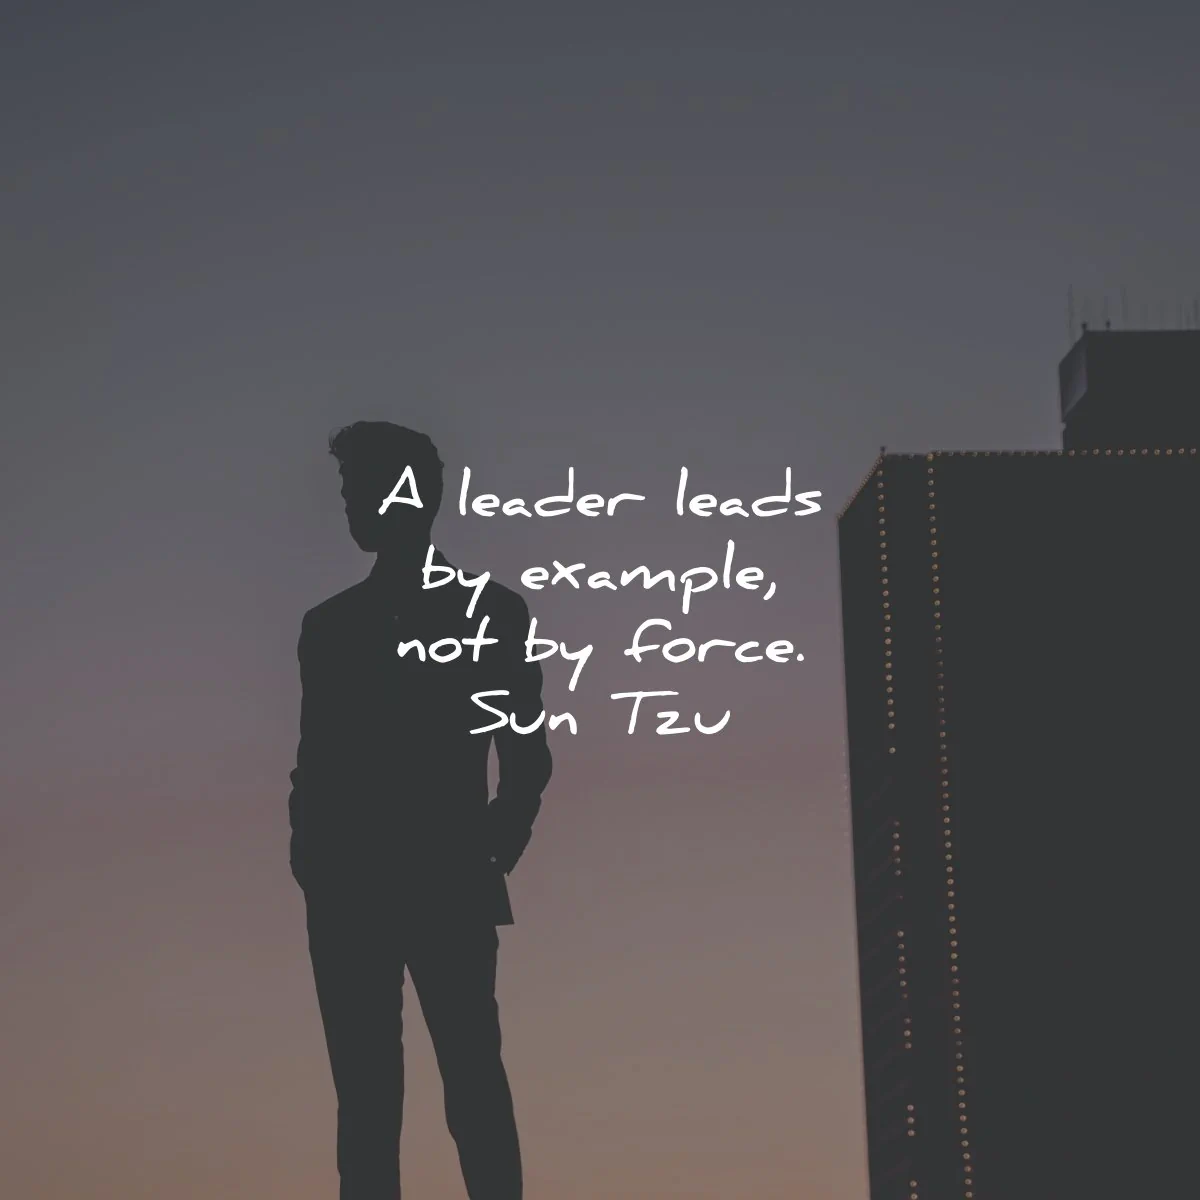 sun tzu quotes leader leads example force wisdom